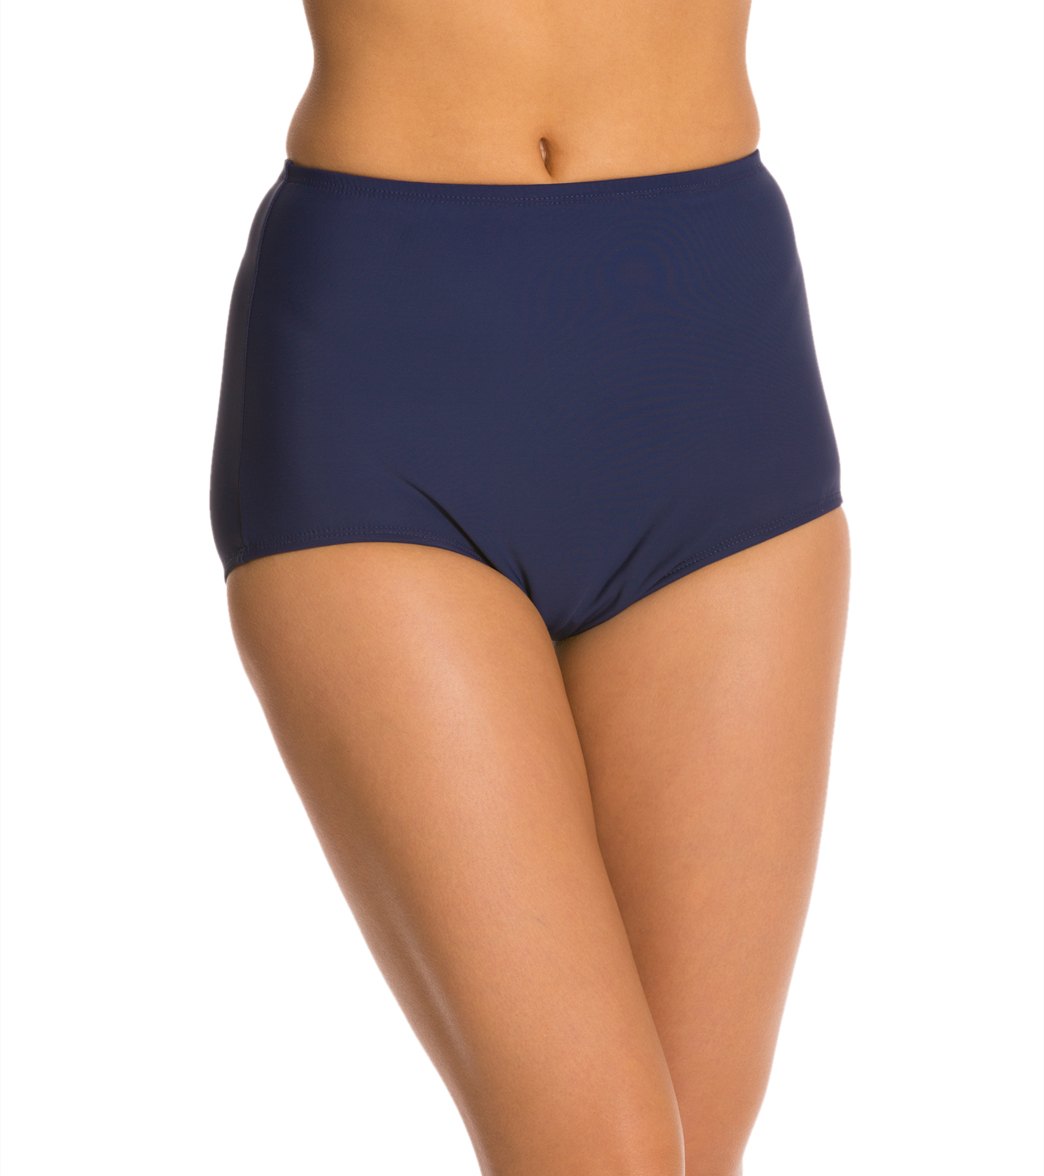 Topanga Solid Conservative Brief Bikini Bottom - Navy 14 - Swimoutlet.com